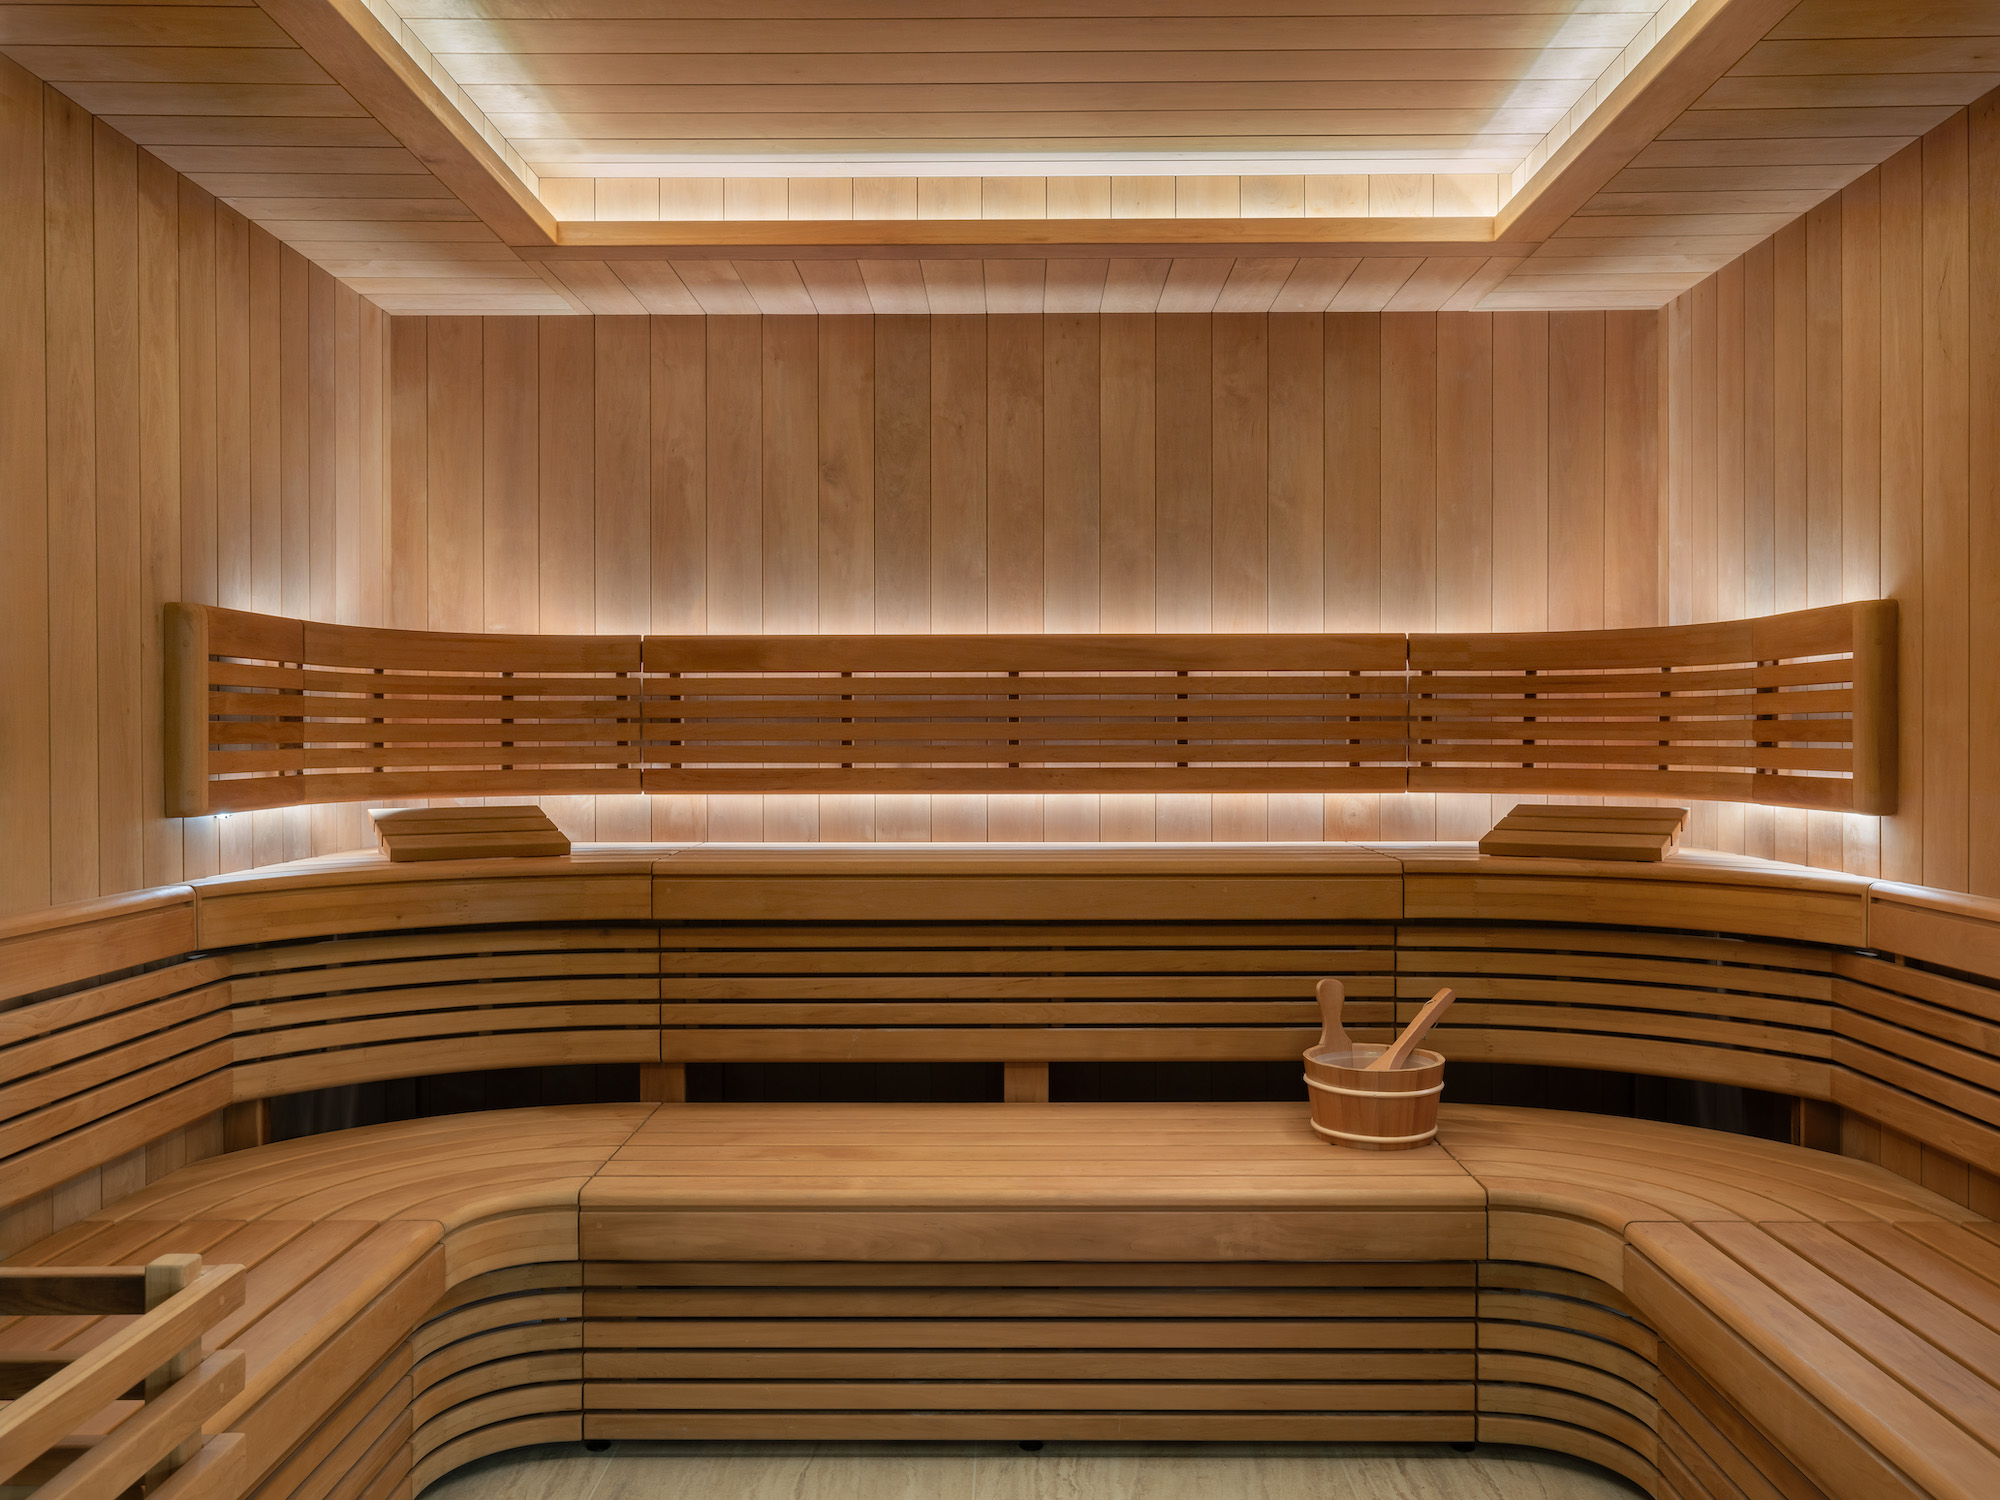 Sauna at Raffles London, designed by Goddard Littlefair in Effect Magazine